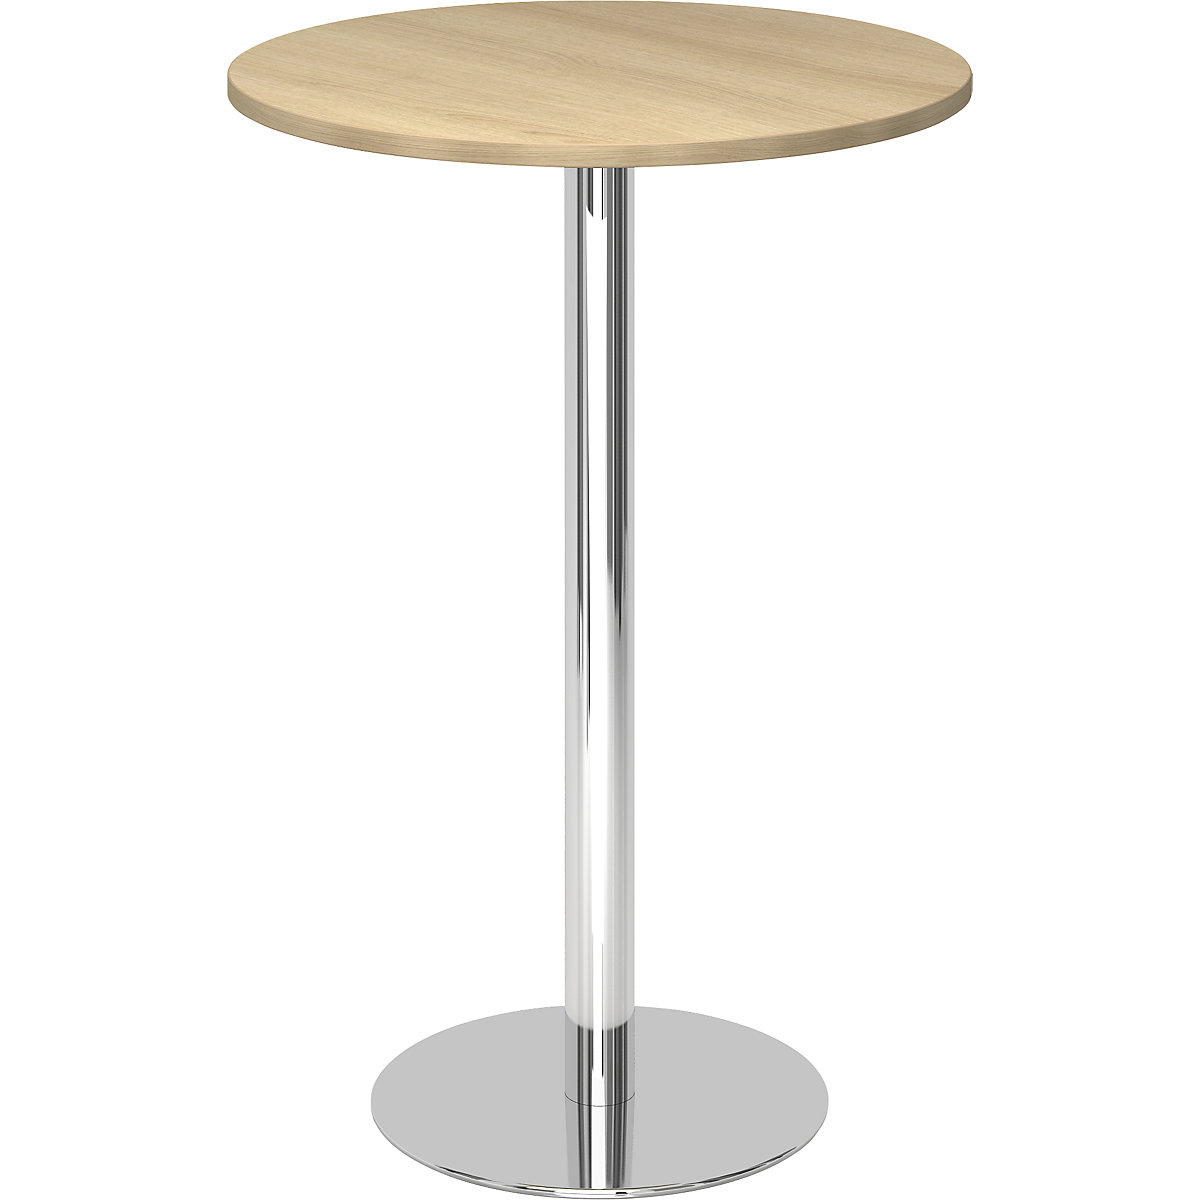 Pedestal table, Ø 800 mm, 1116 mm high, chrome plated frame, tabletop in oak finish-6